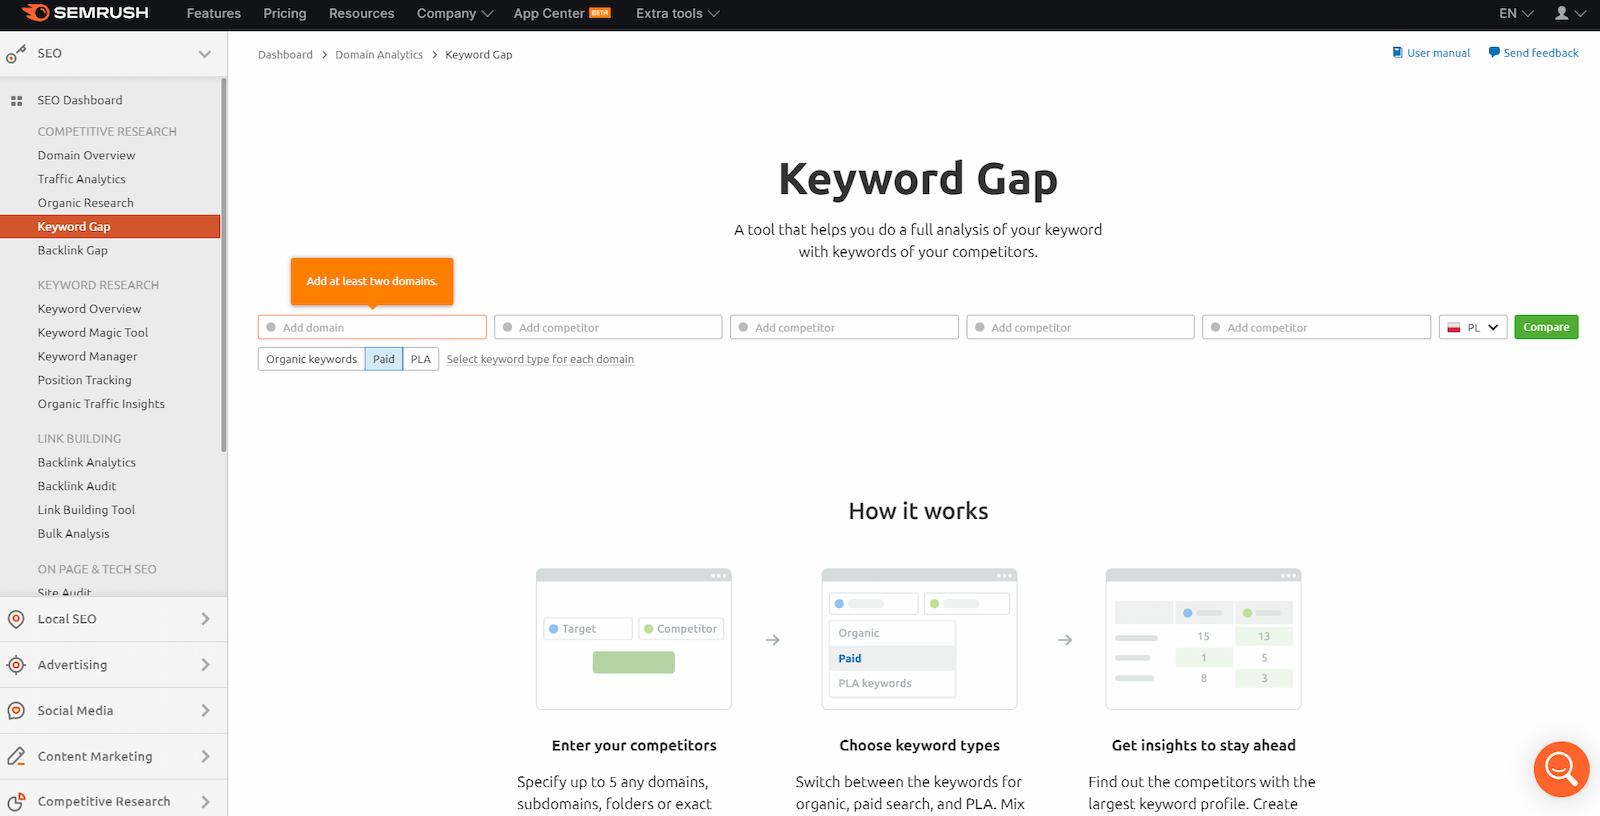 Keyword Gap analysis is one of Semrush's key features